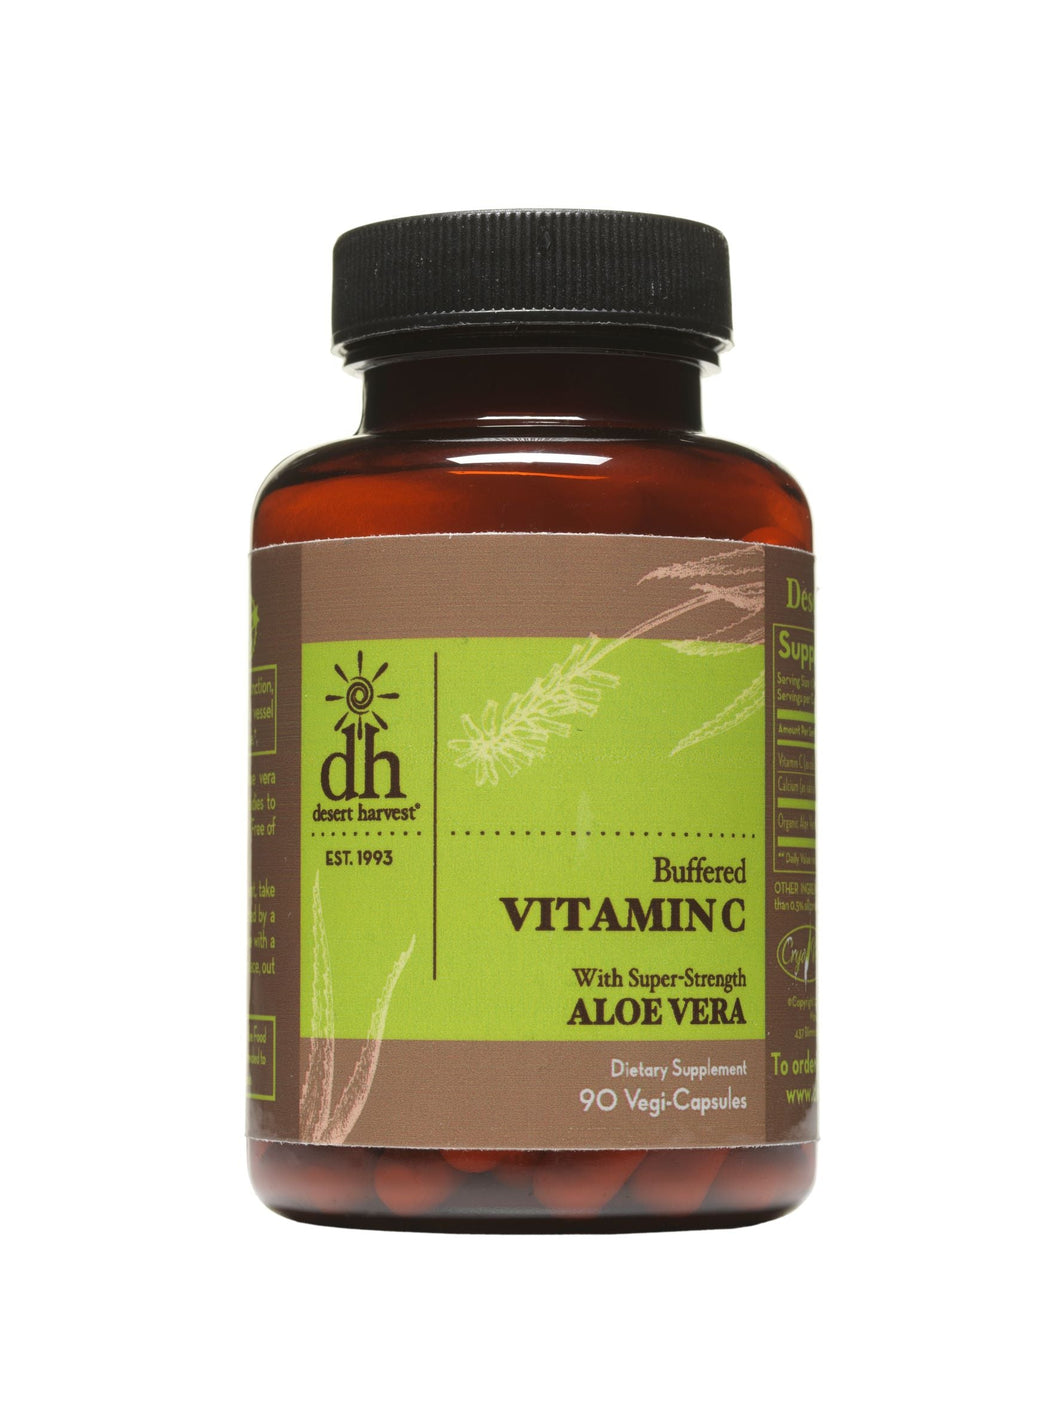 Buffered Vitamin C | with Super-Strength Aloe Vera - 90 Capsules Oral Supplement Desert Harvest 